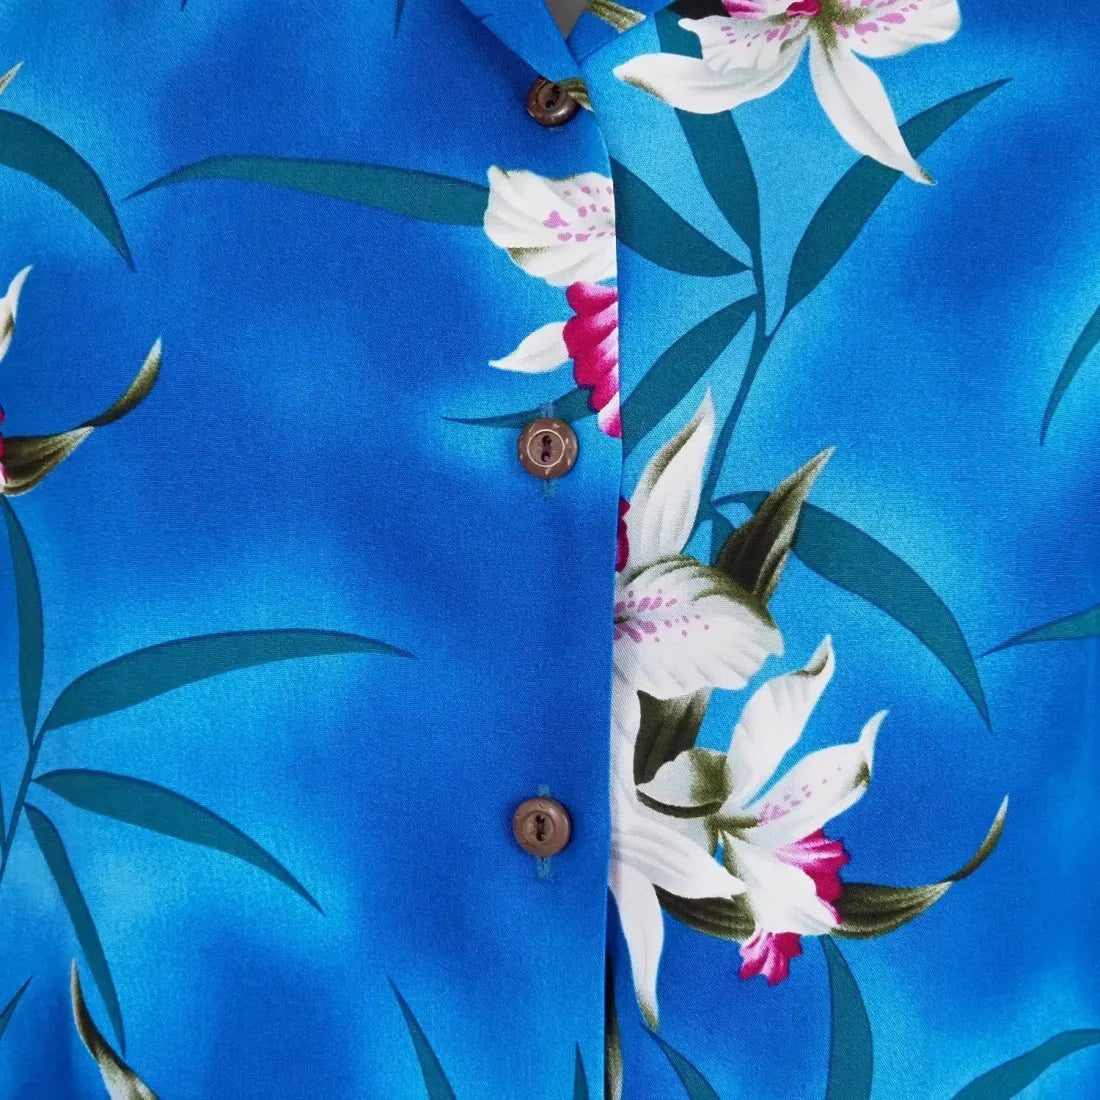 Poipu Blue Lady’s Hawaiian Rayon Blouse - Made In Hawaii